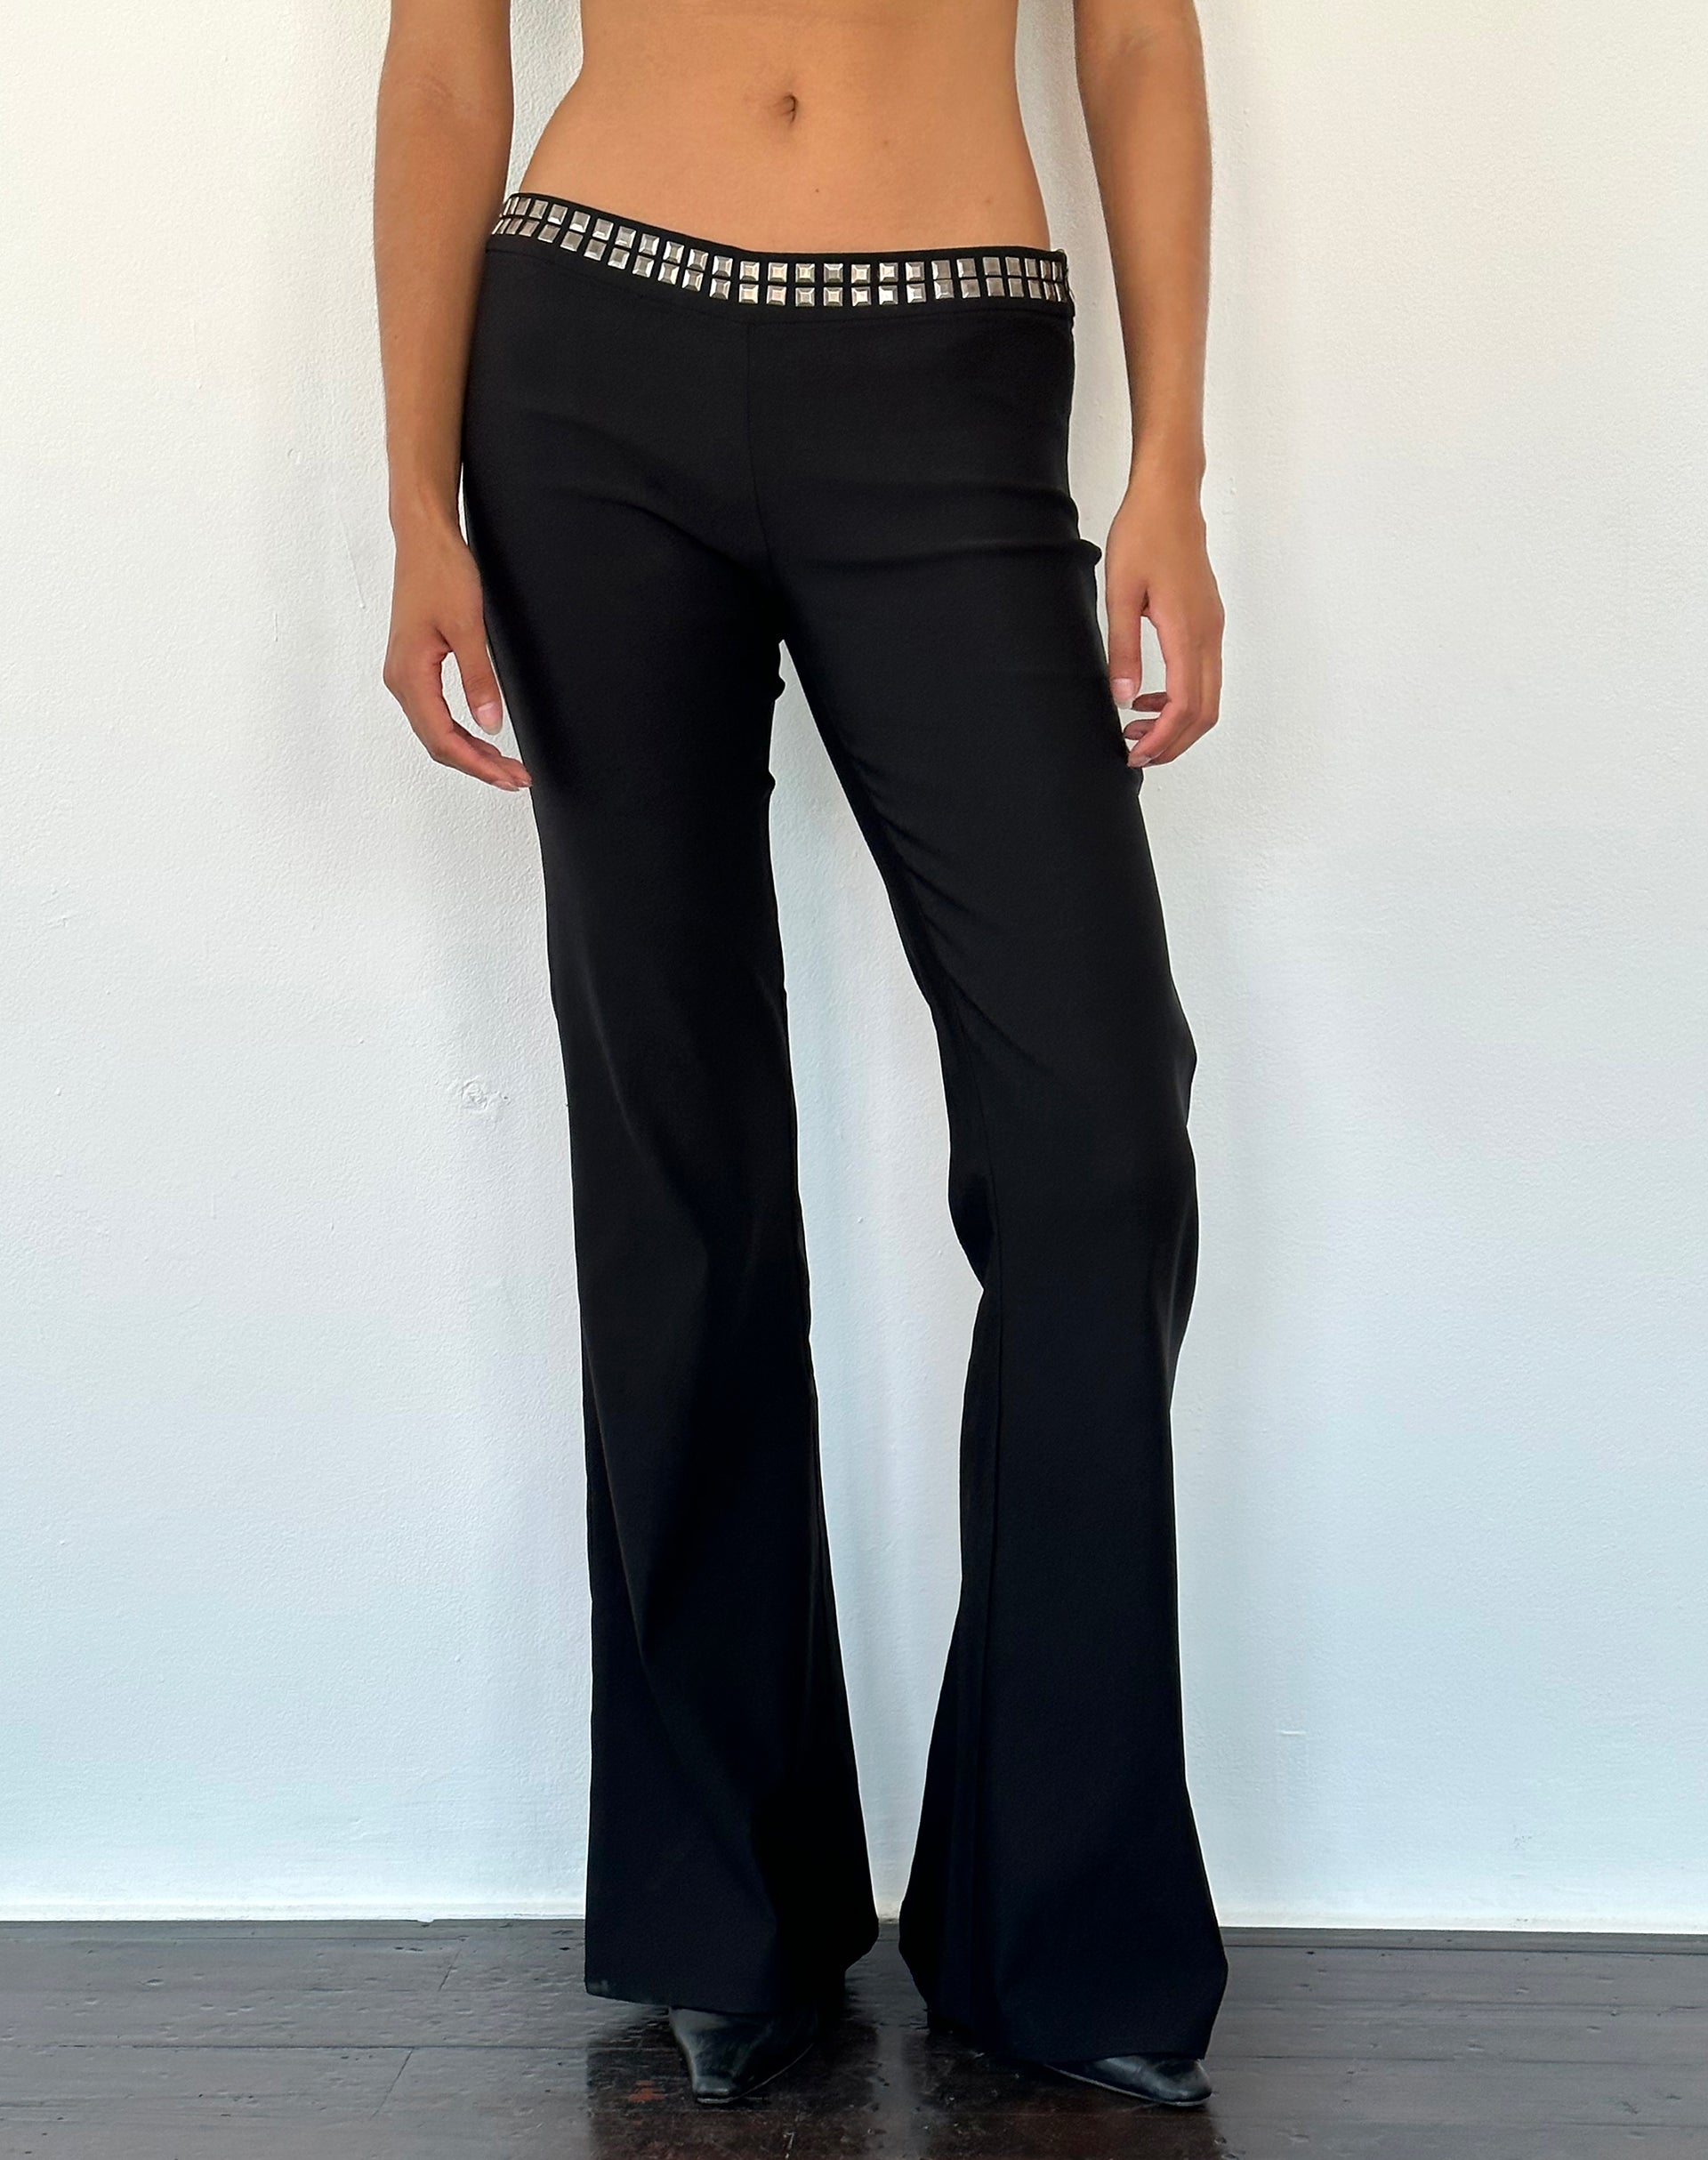 Imagen de Macias Studded Flared pantalones en negro Sastrería